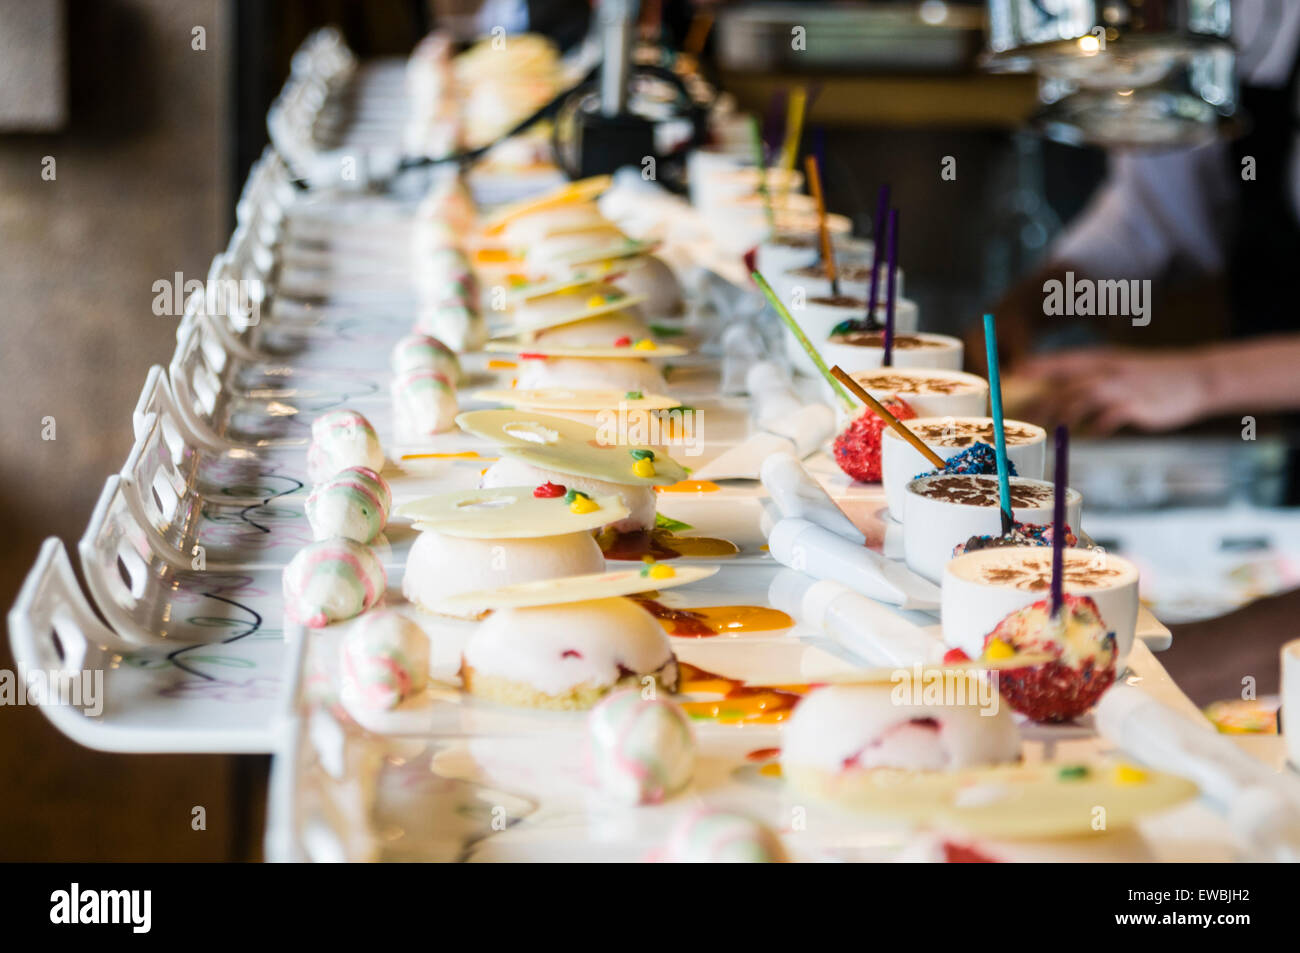 Staff preparare il dessert sul tram Hoftrammm ristorante, Den Haag, Paesi Bassi. Foto Stock